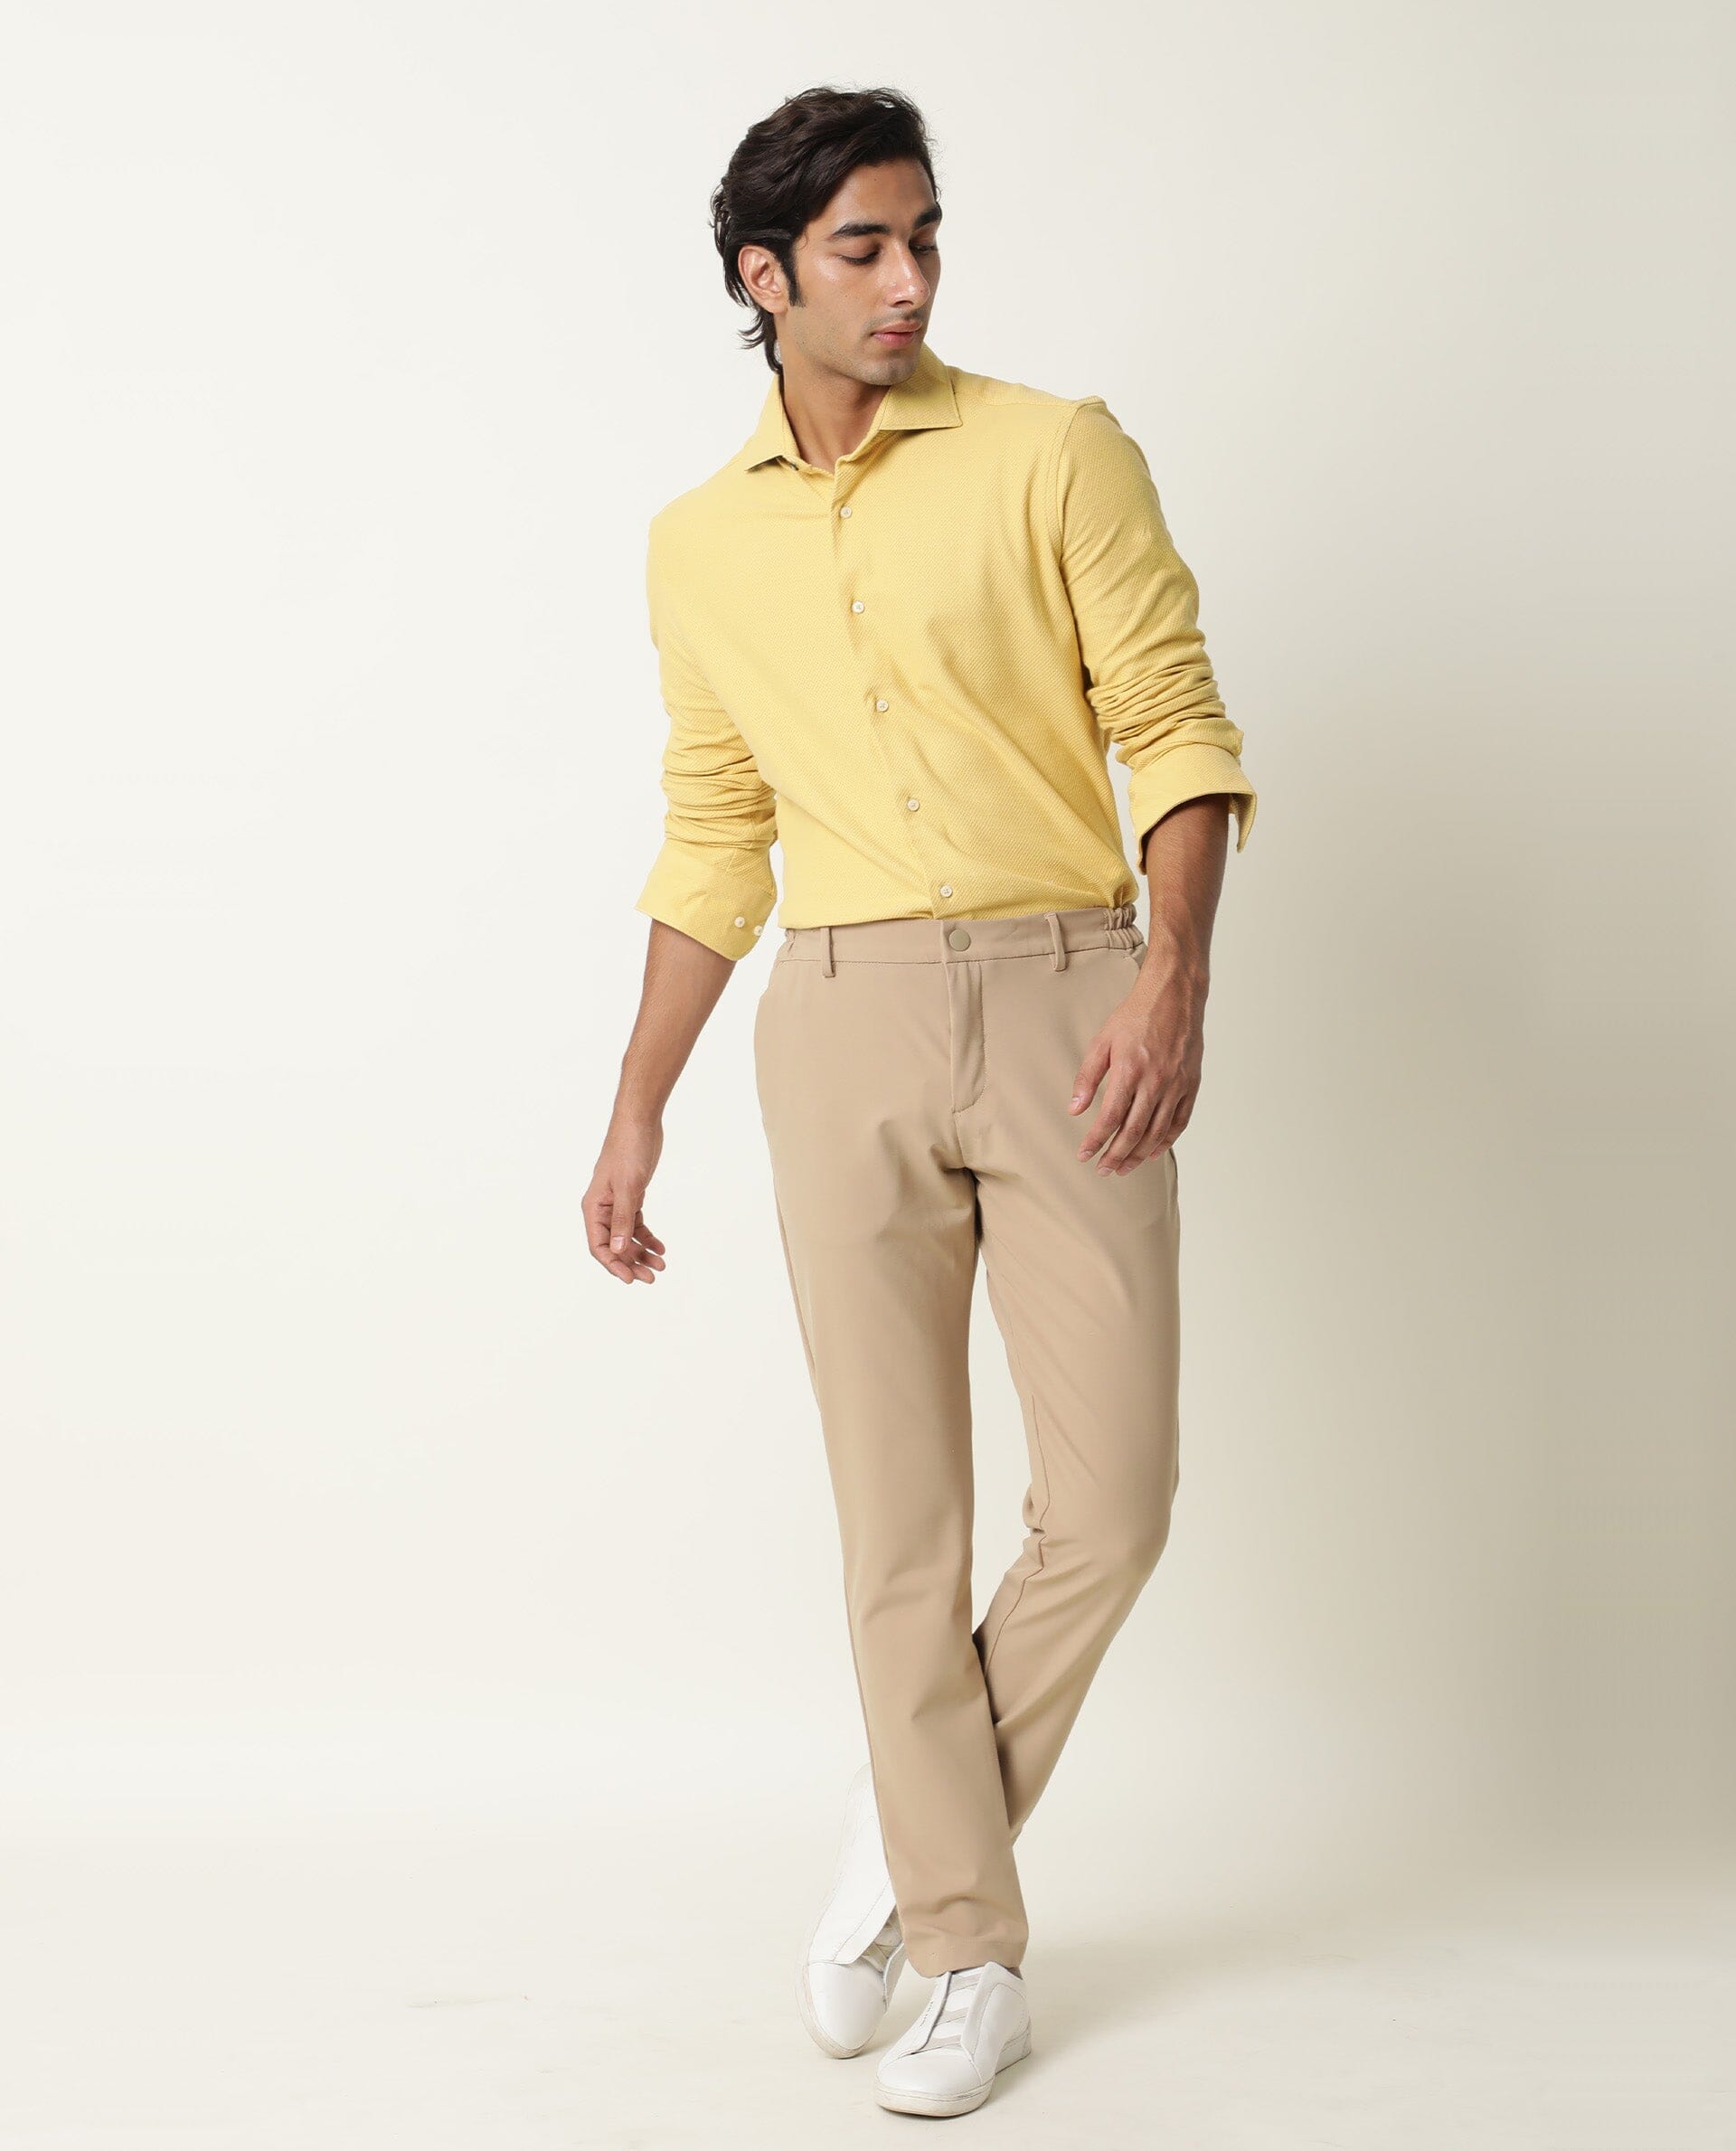 White with Corn Yellow Candy Stripes Mens Cotton Shirt – kollercut